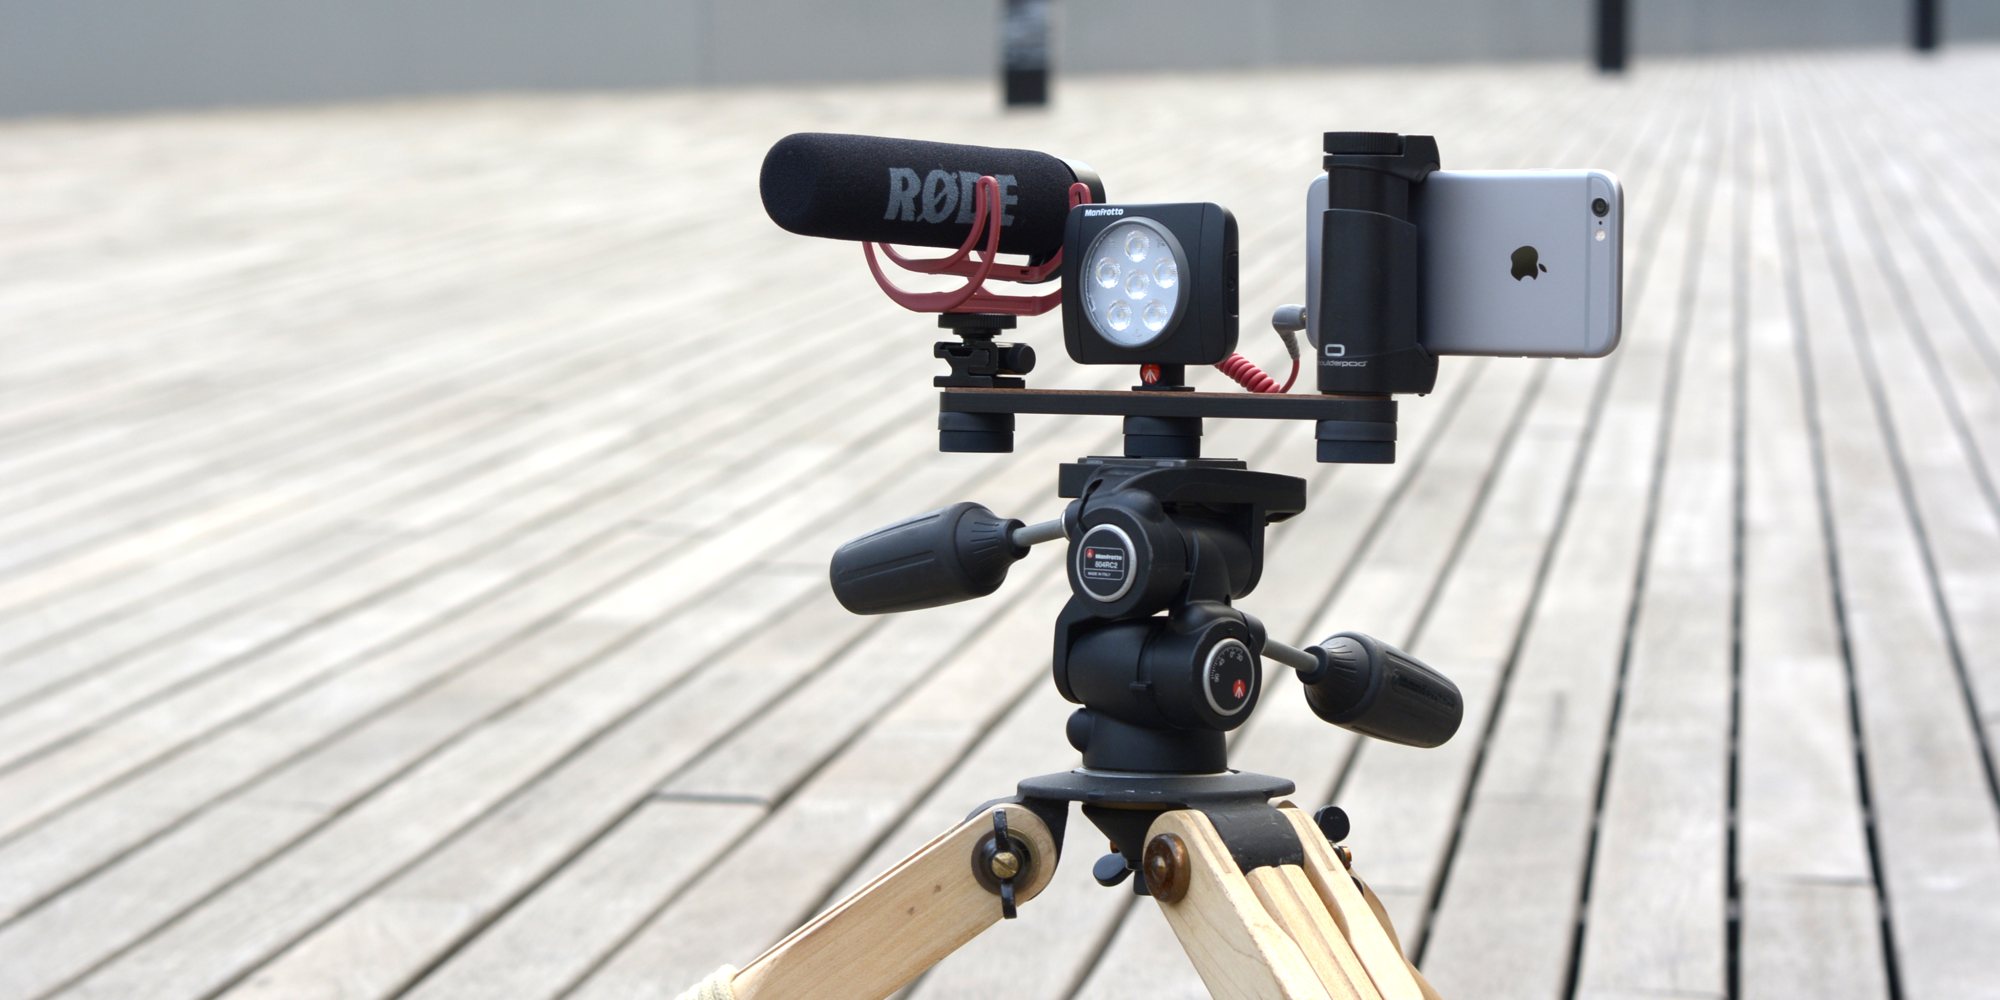 Review: ShoulderPod brings Lego-like modularity camera - 9to5Mac